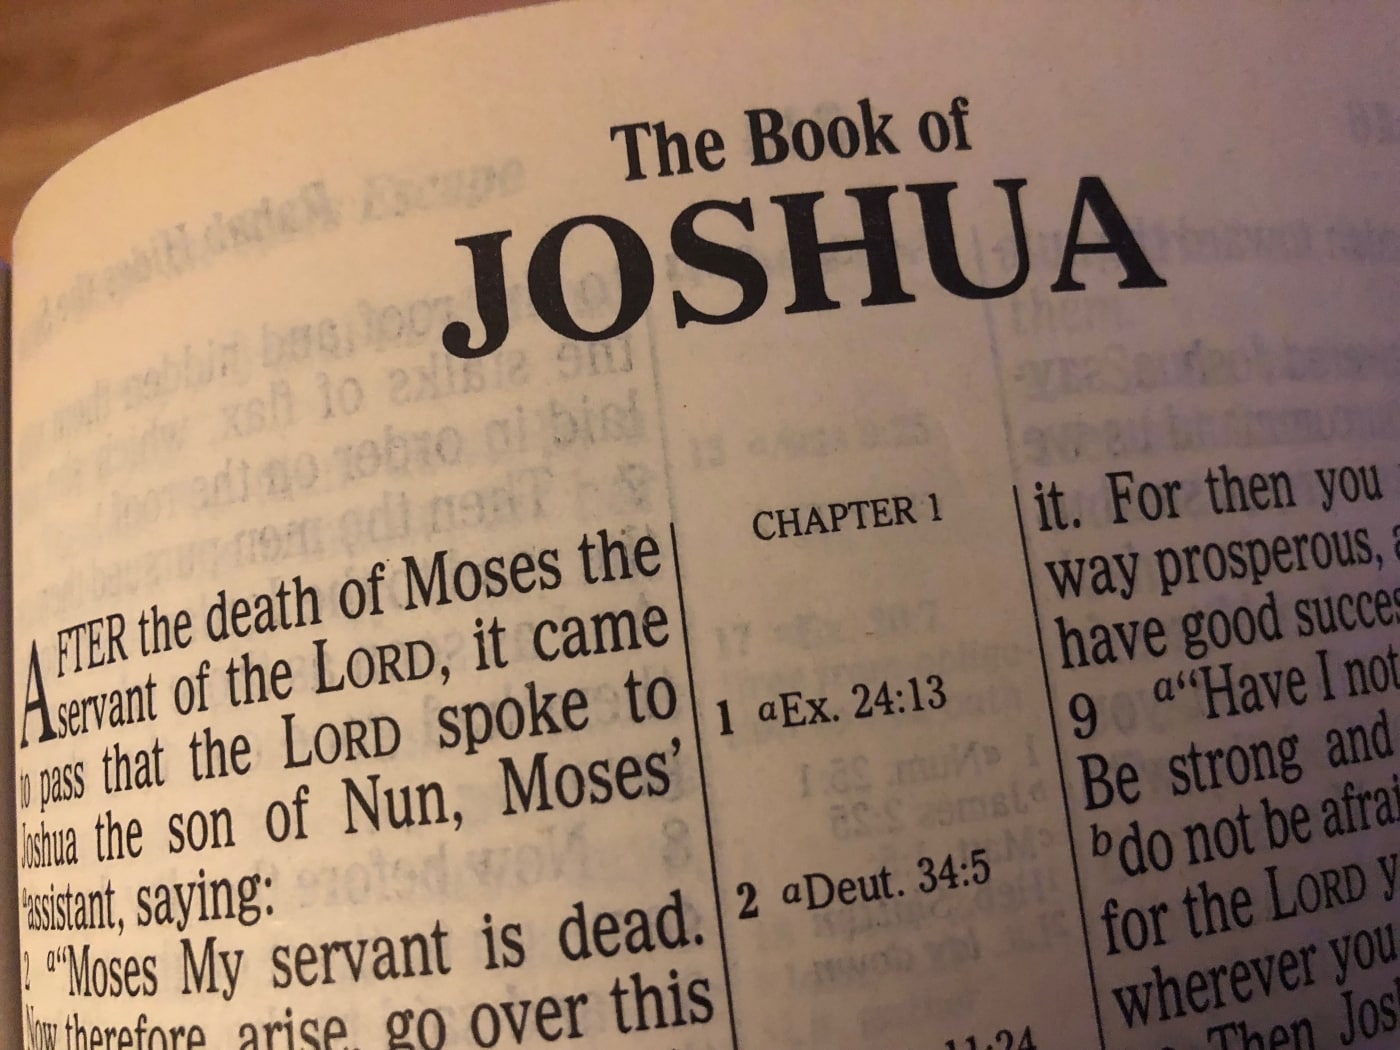 Joshua # 08 -- Jos 5:13-16